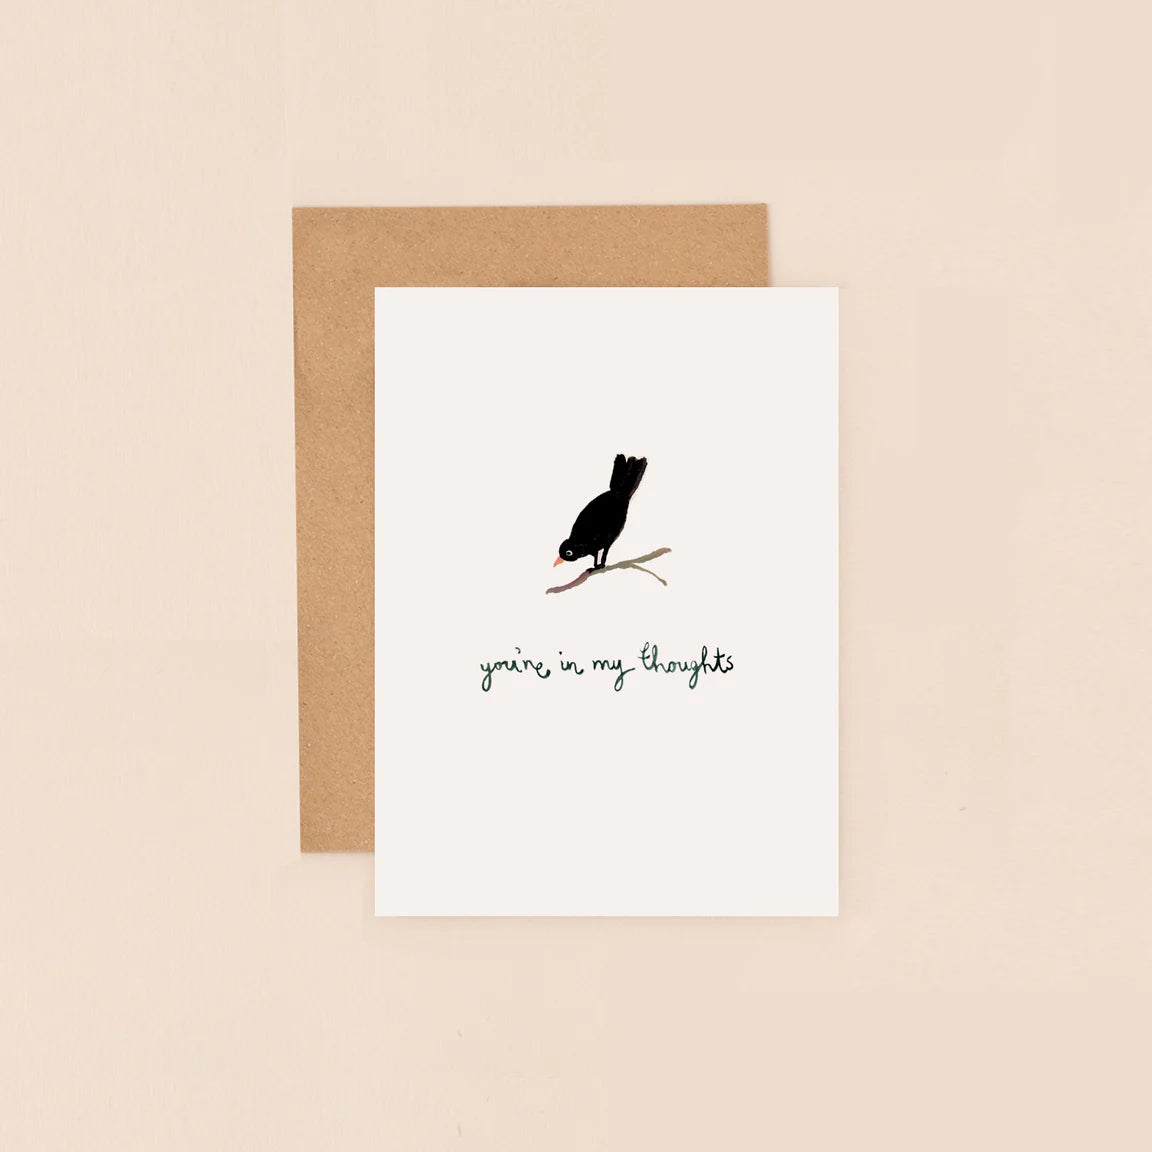 Fabulous Greeting Cards Louise Mulgrew Mini Card Thoughtful Black Bird Card by Weirs of Baggot Street